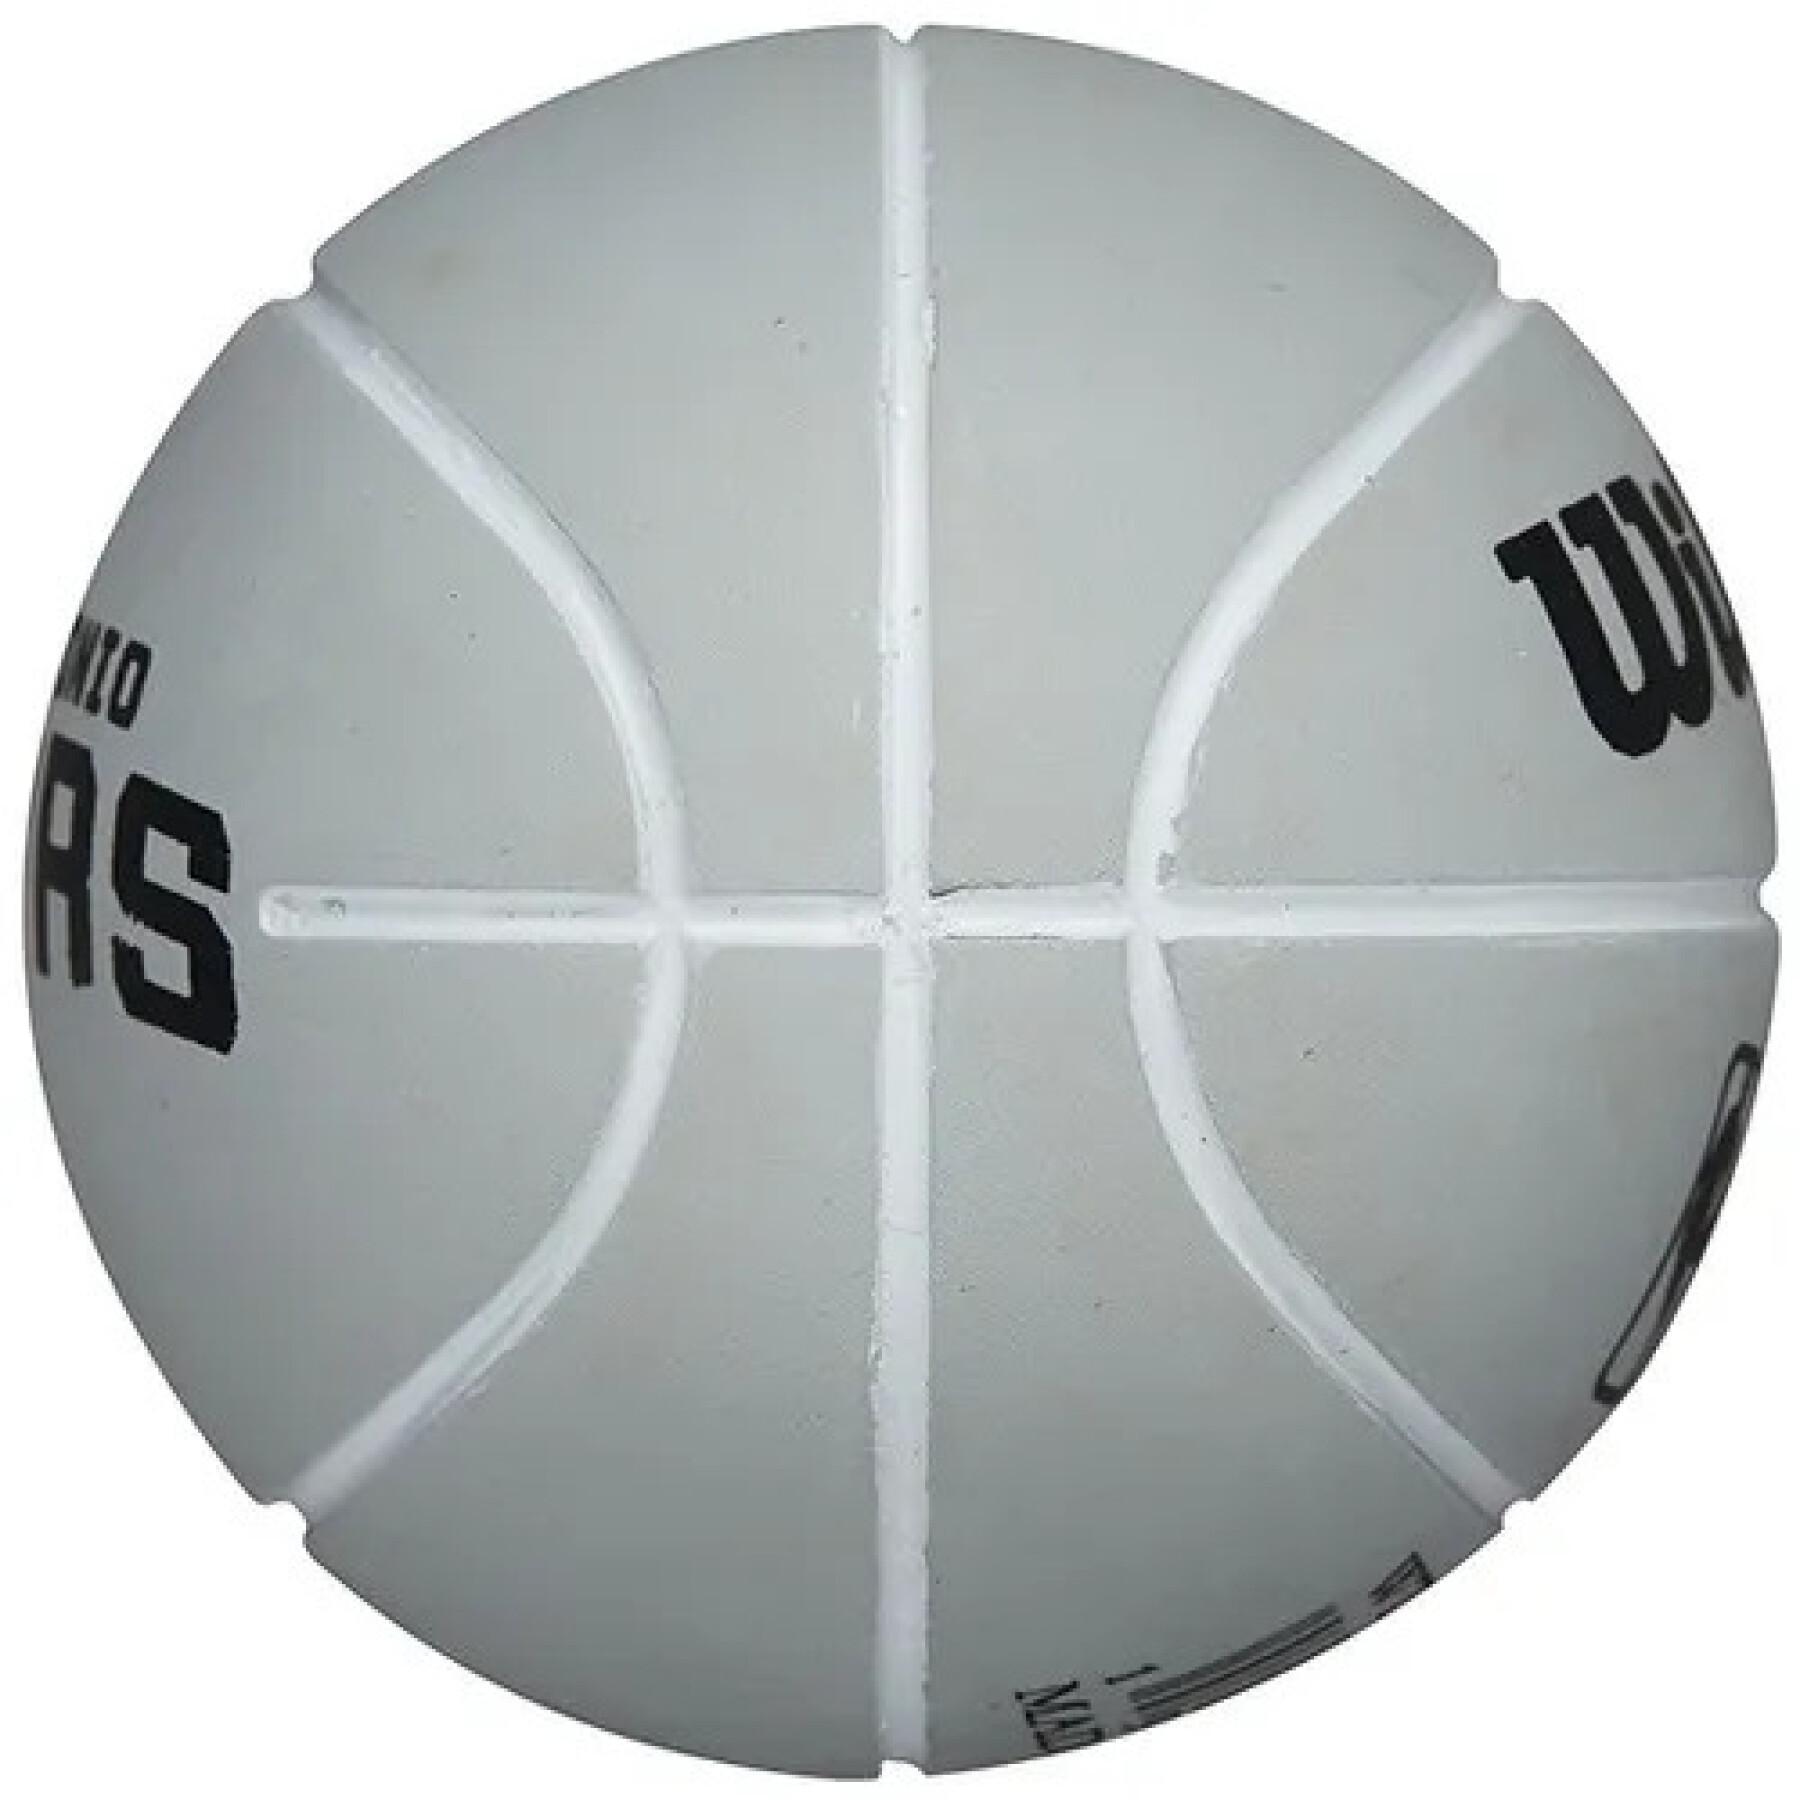 Balón NBA Dribbler San Antonio Spurs